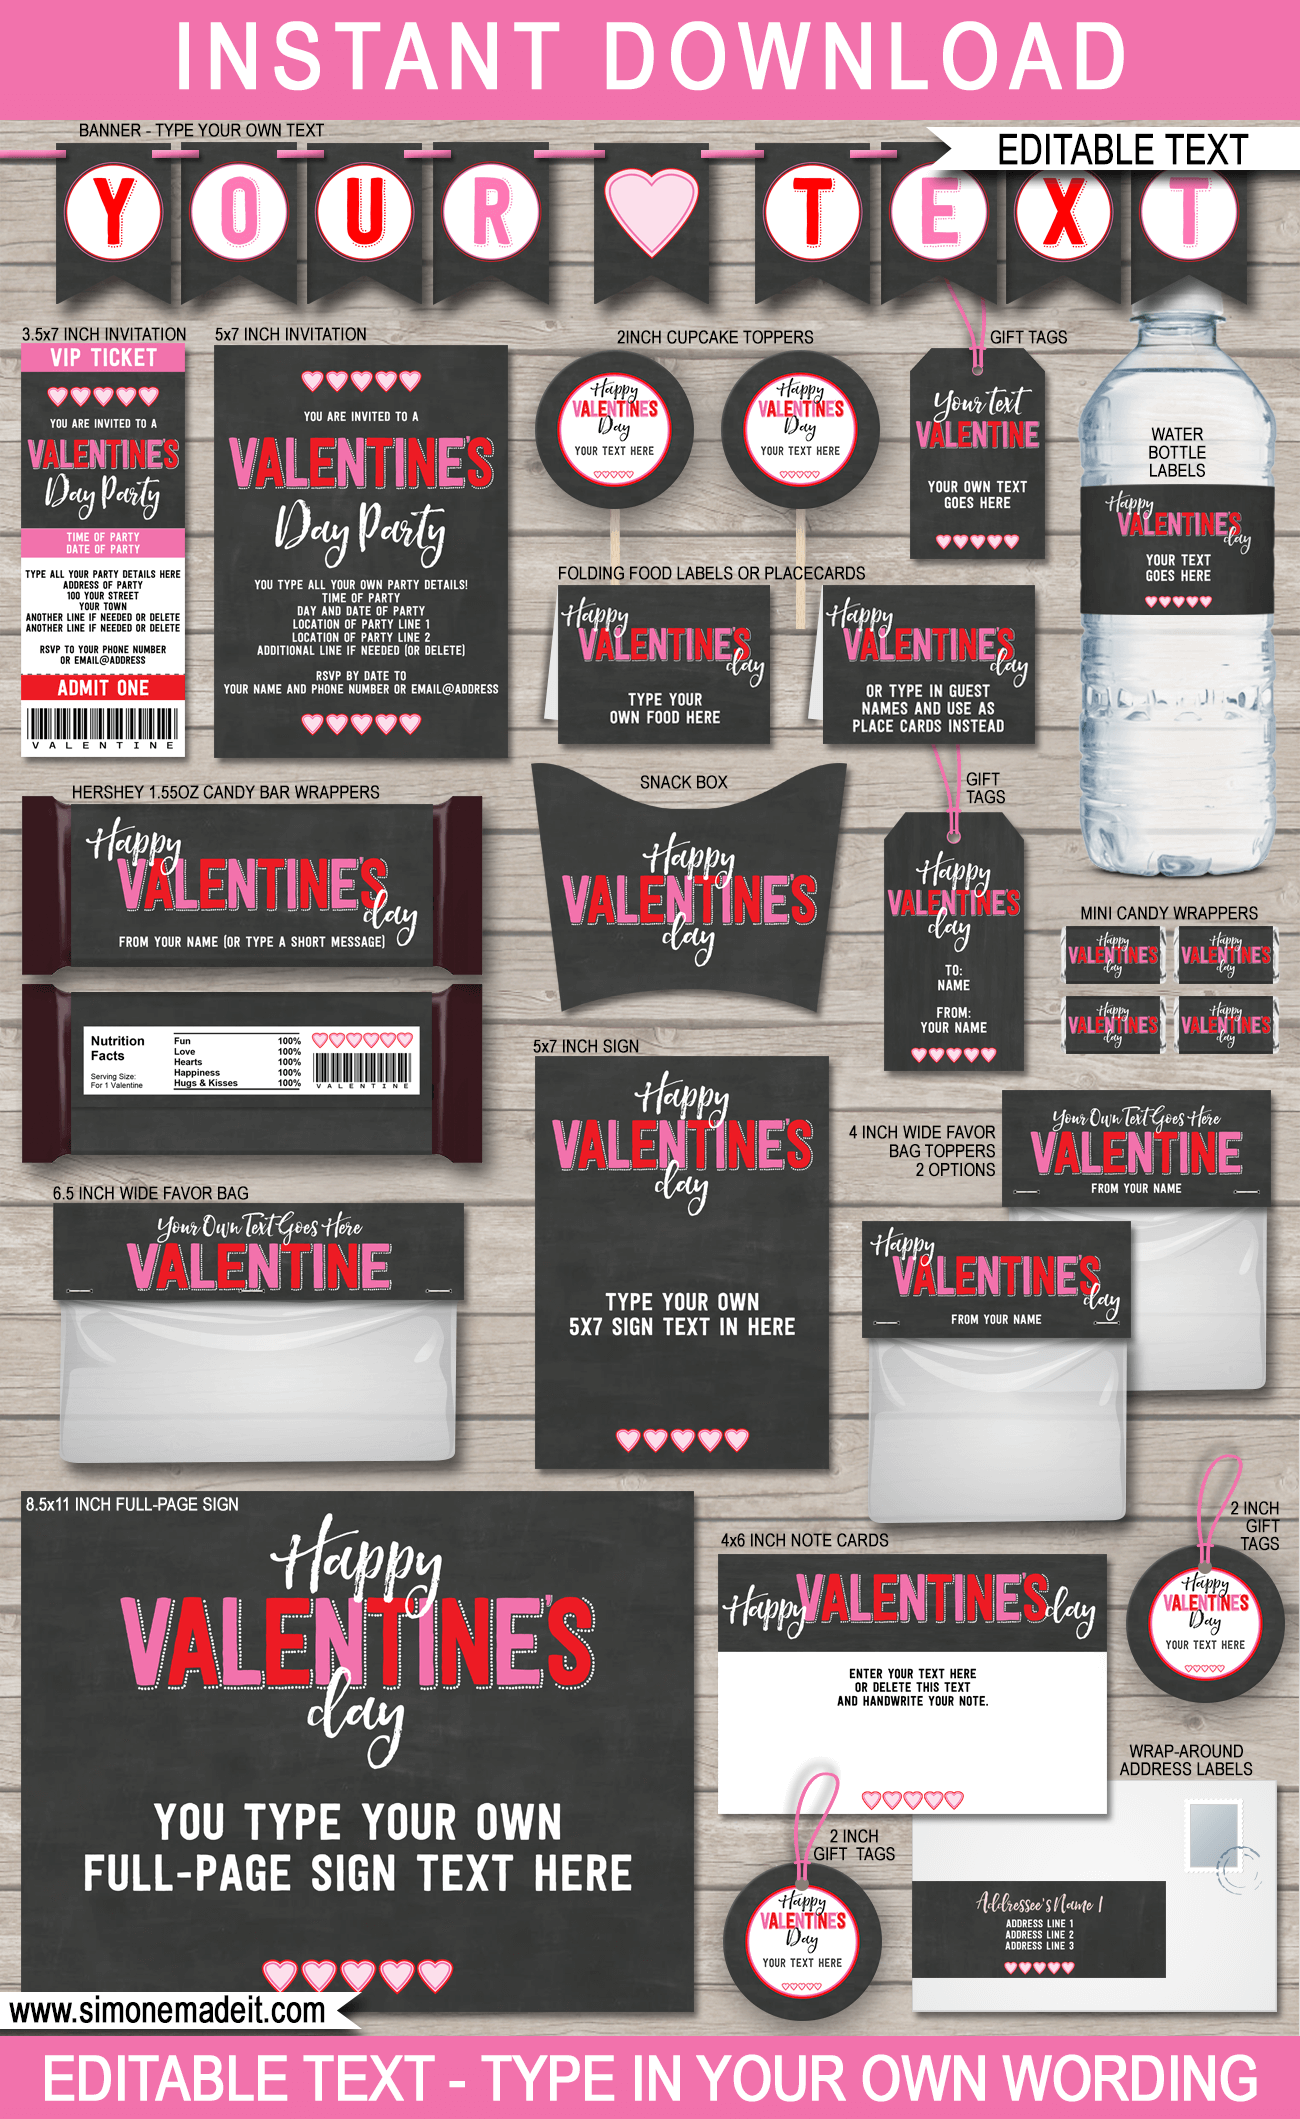 Valentine's Day Printables, Party Invitations & Decorations | DIY Editable Templates | INSTANT DOWNLOAD via simonemadeit.com